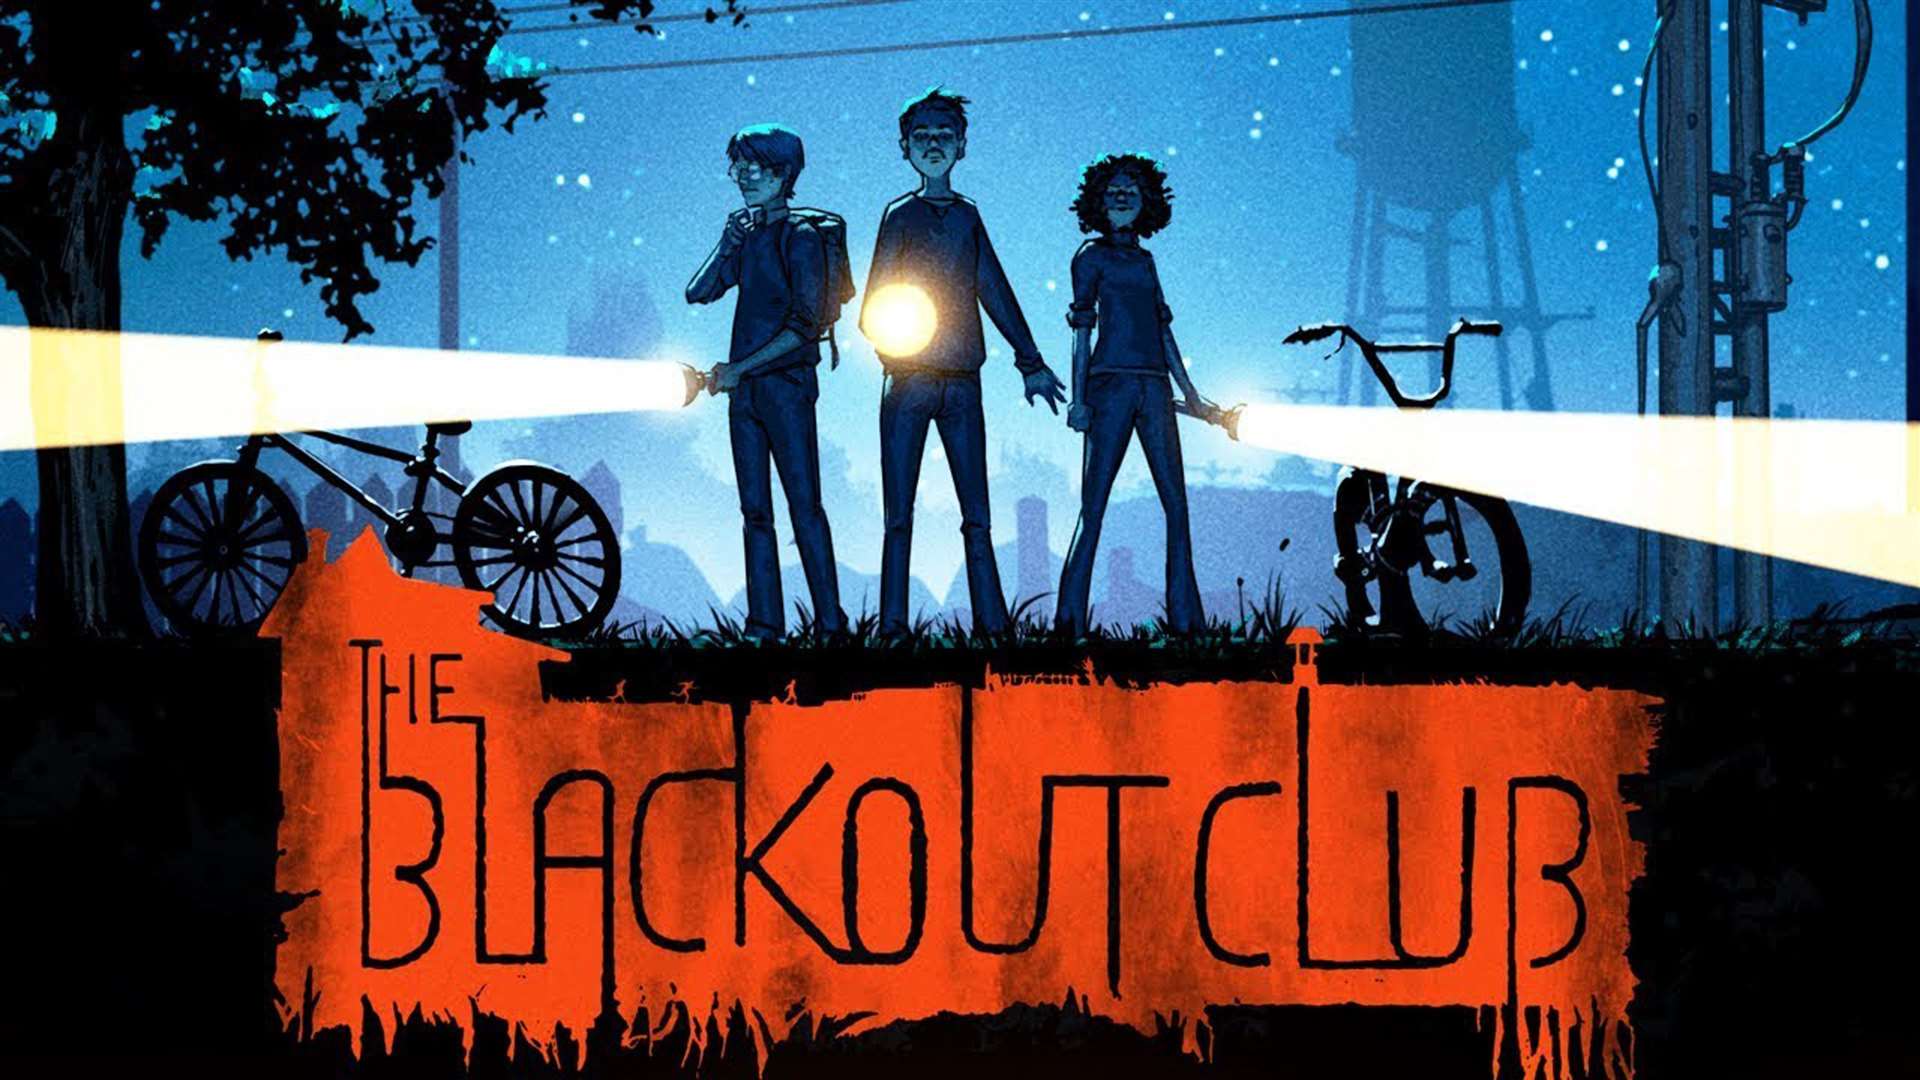 The Blackout Club. Picture: Handout/PA